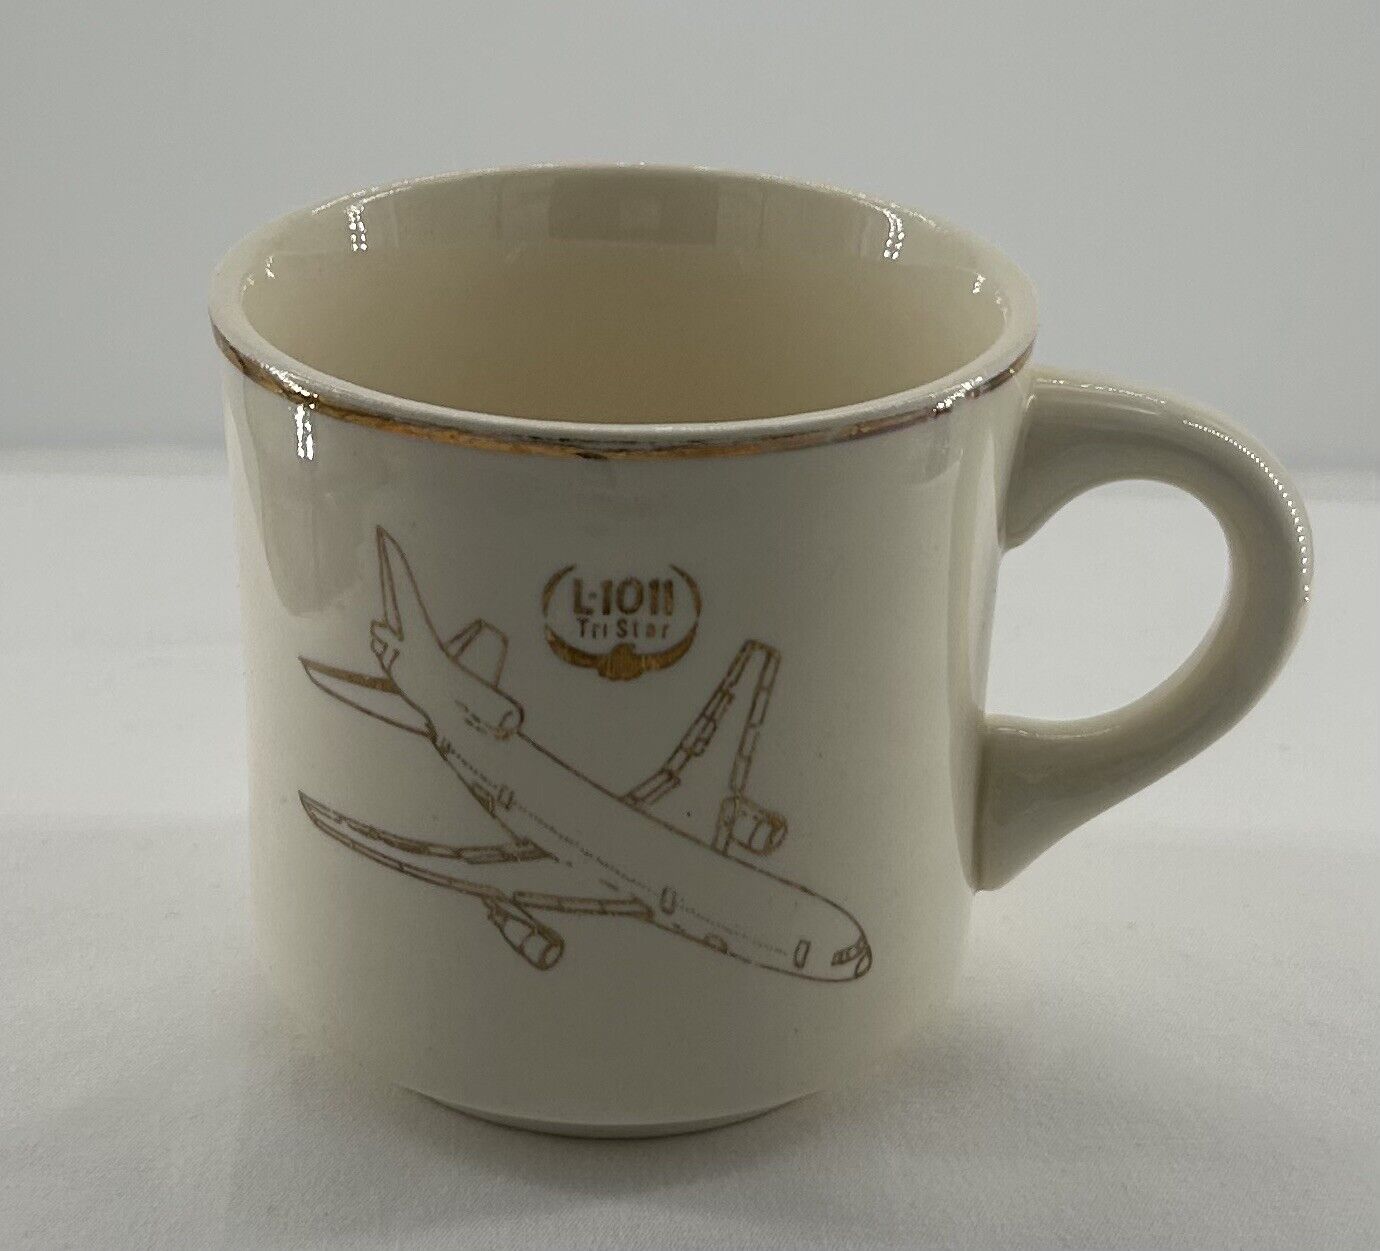 L 1011 Tri Star Lockheed Airplane Promo Coffee Cup Vintage